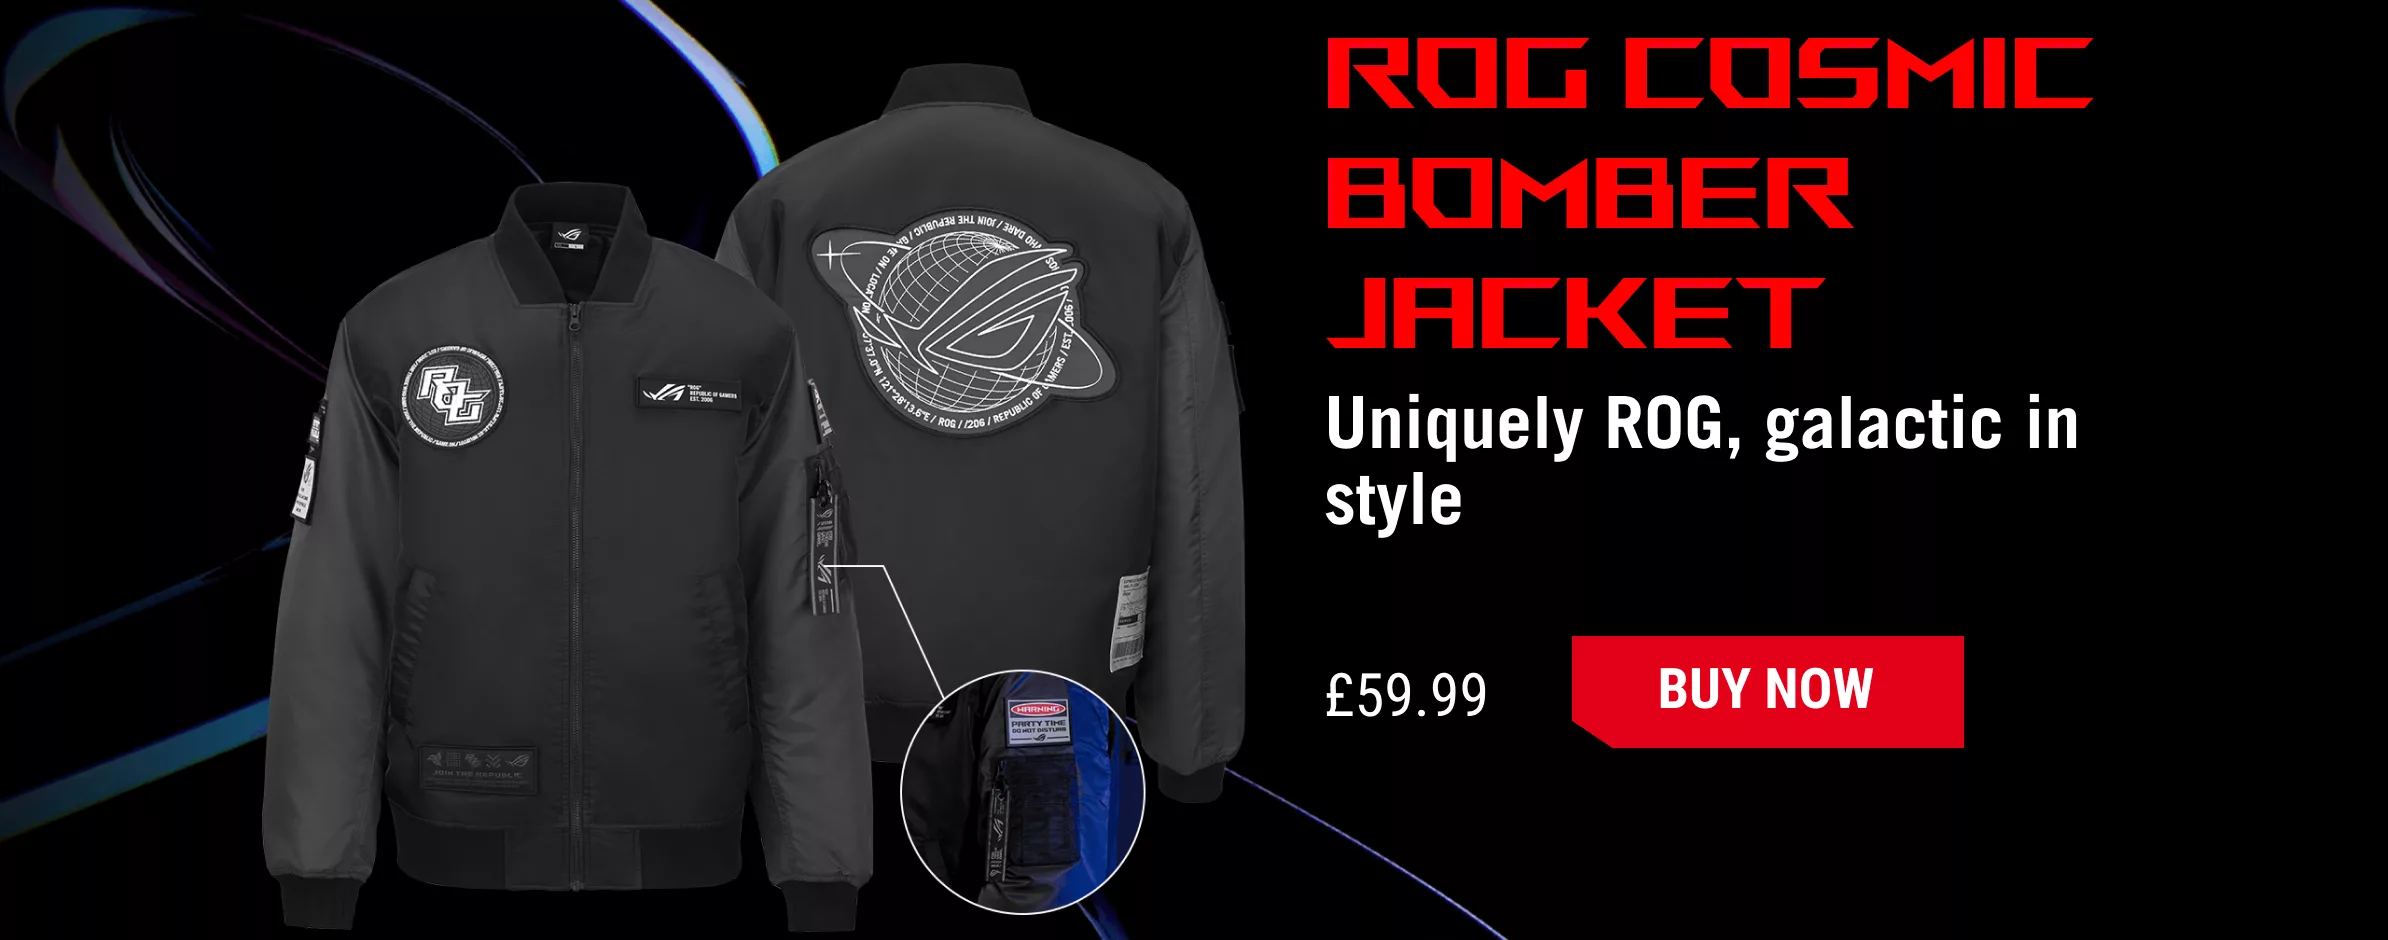 ROG Cosmic Bomber Jacket